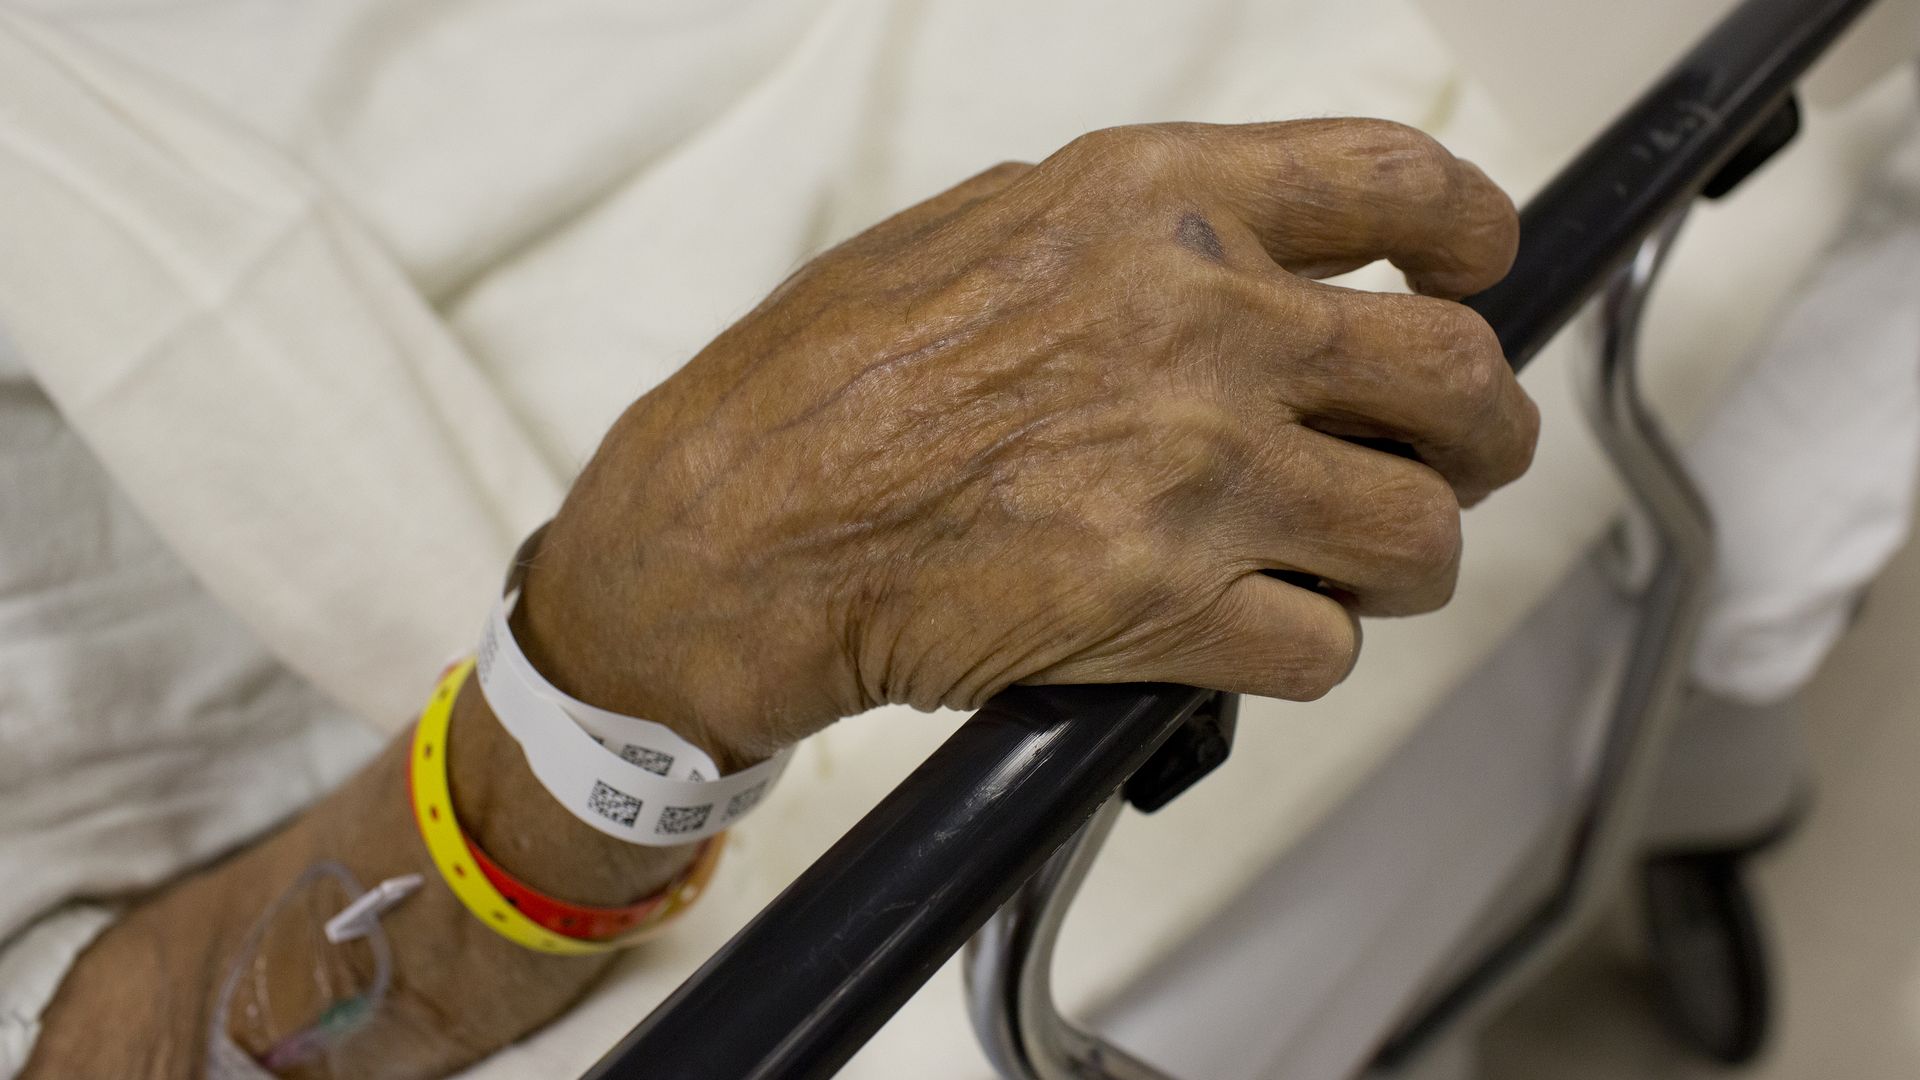 Old man's hand with hospital bracelets